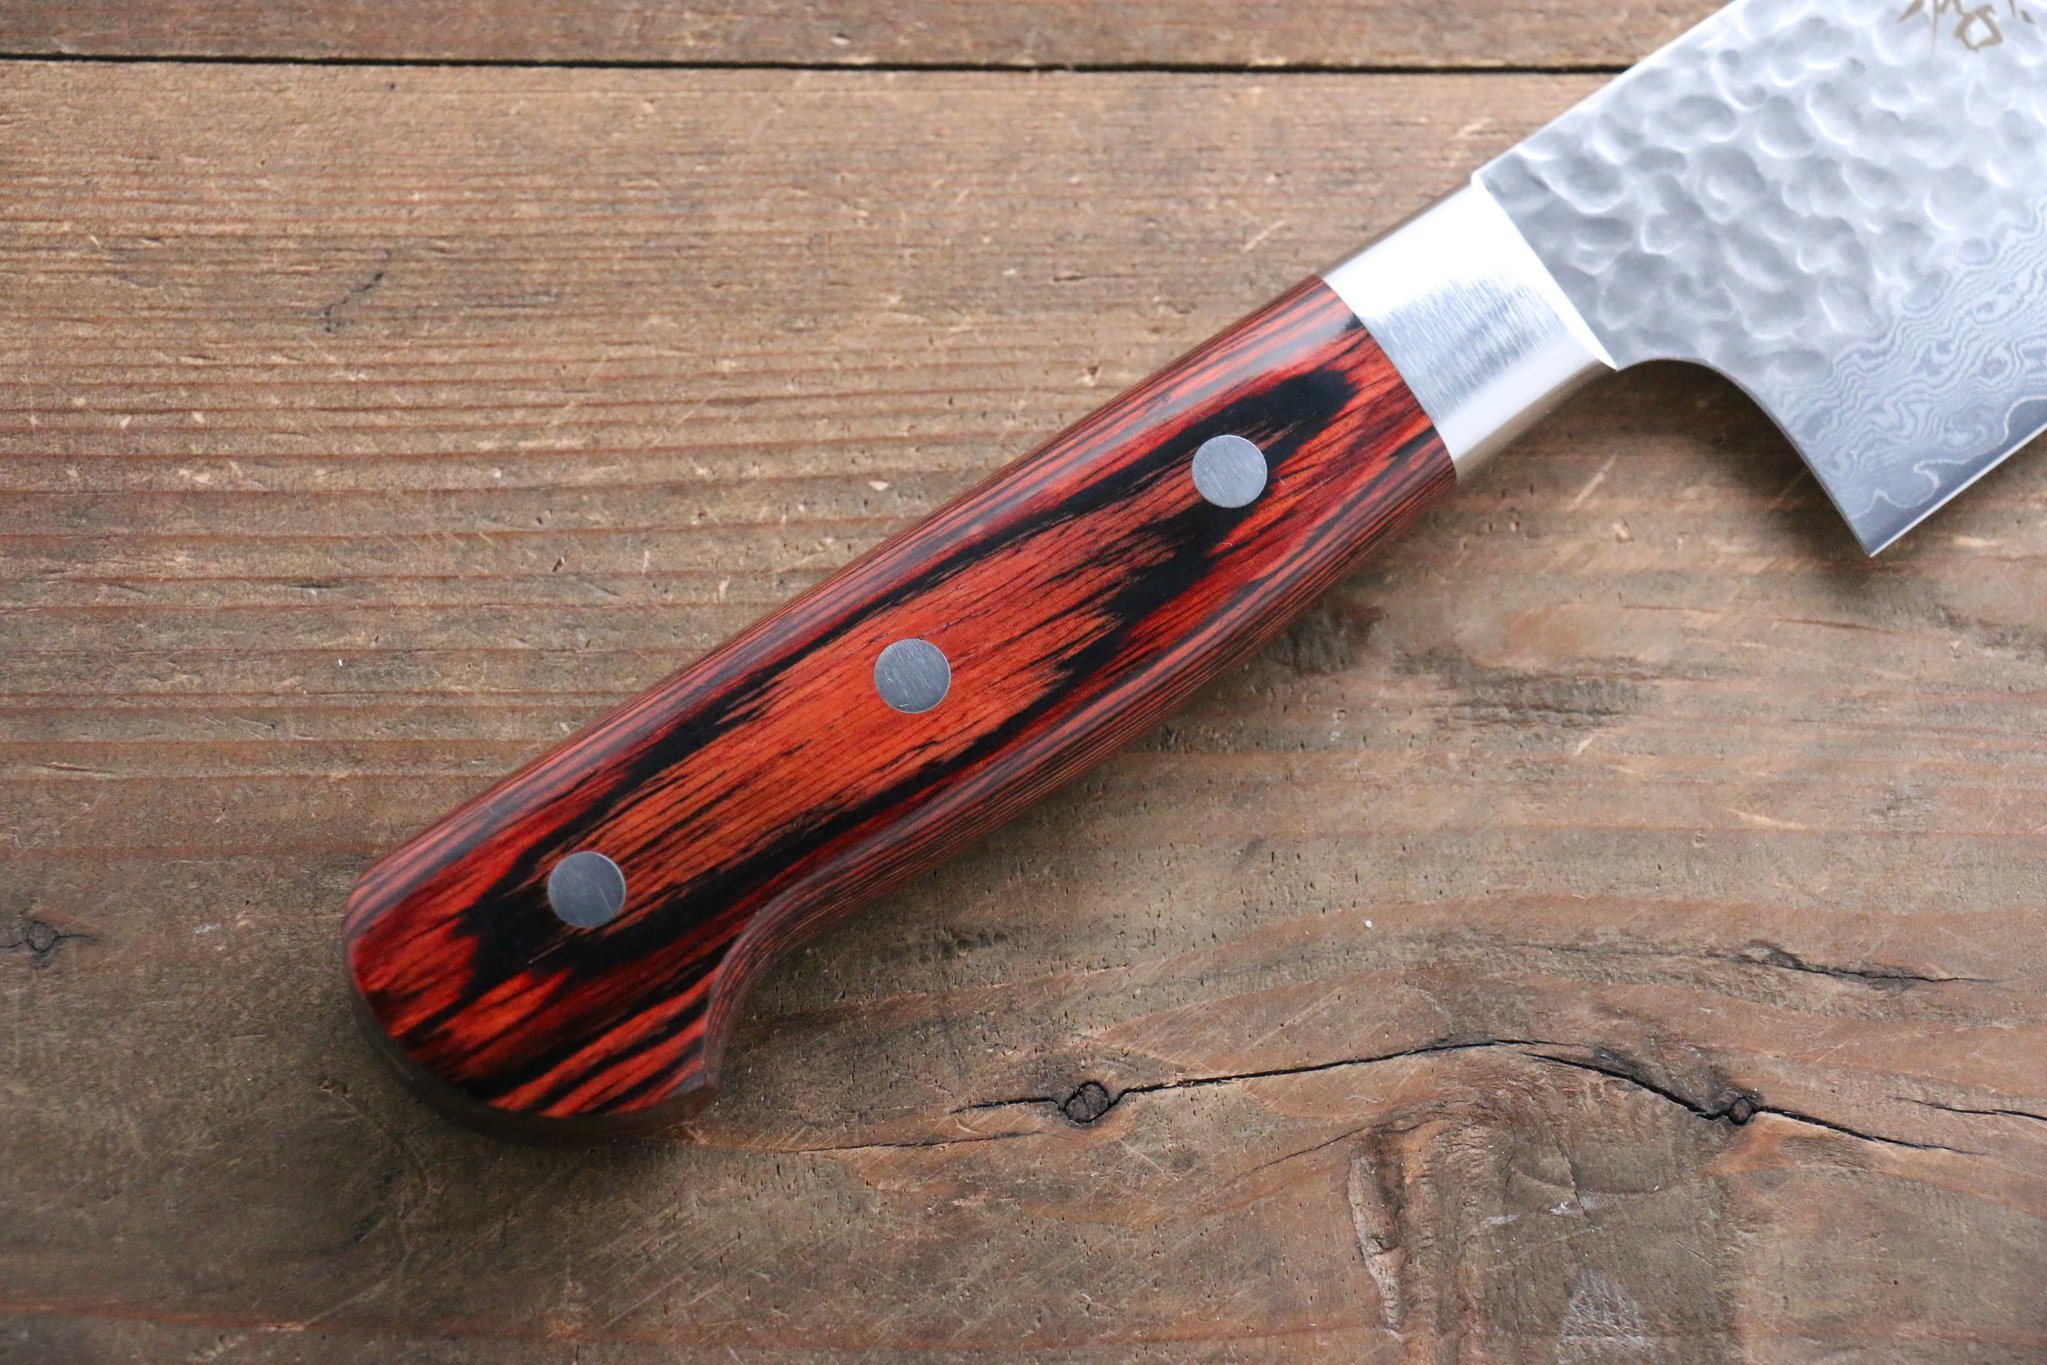 Нож для чистки овощей и фруктов 80 мм, Sakai Takayuki, сталь VG-10 Damascus 17 слоев, рукоять pakka wood от Ножиков